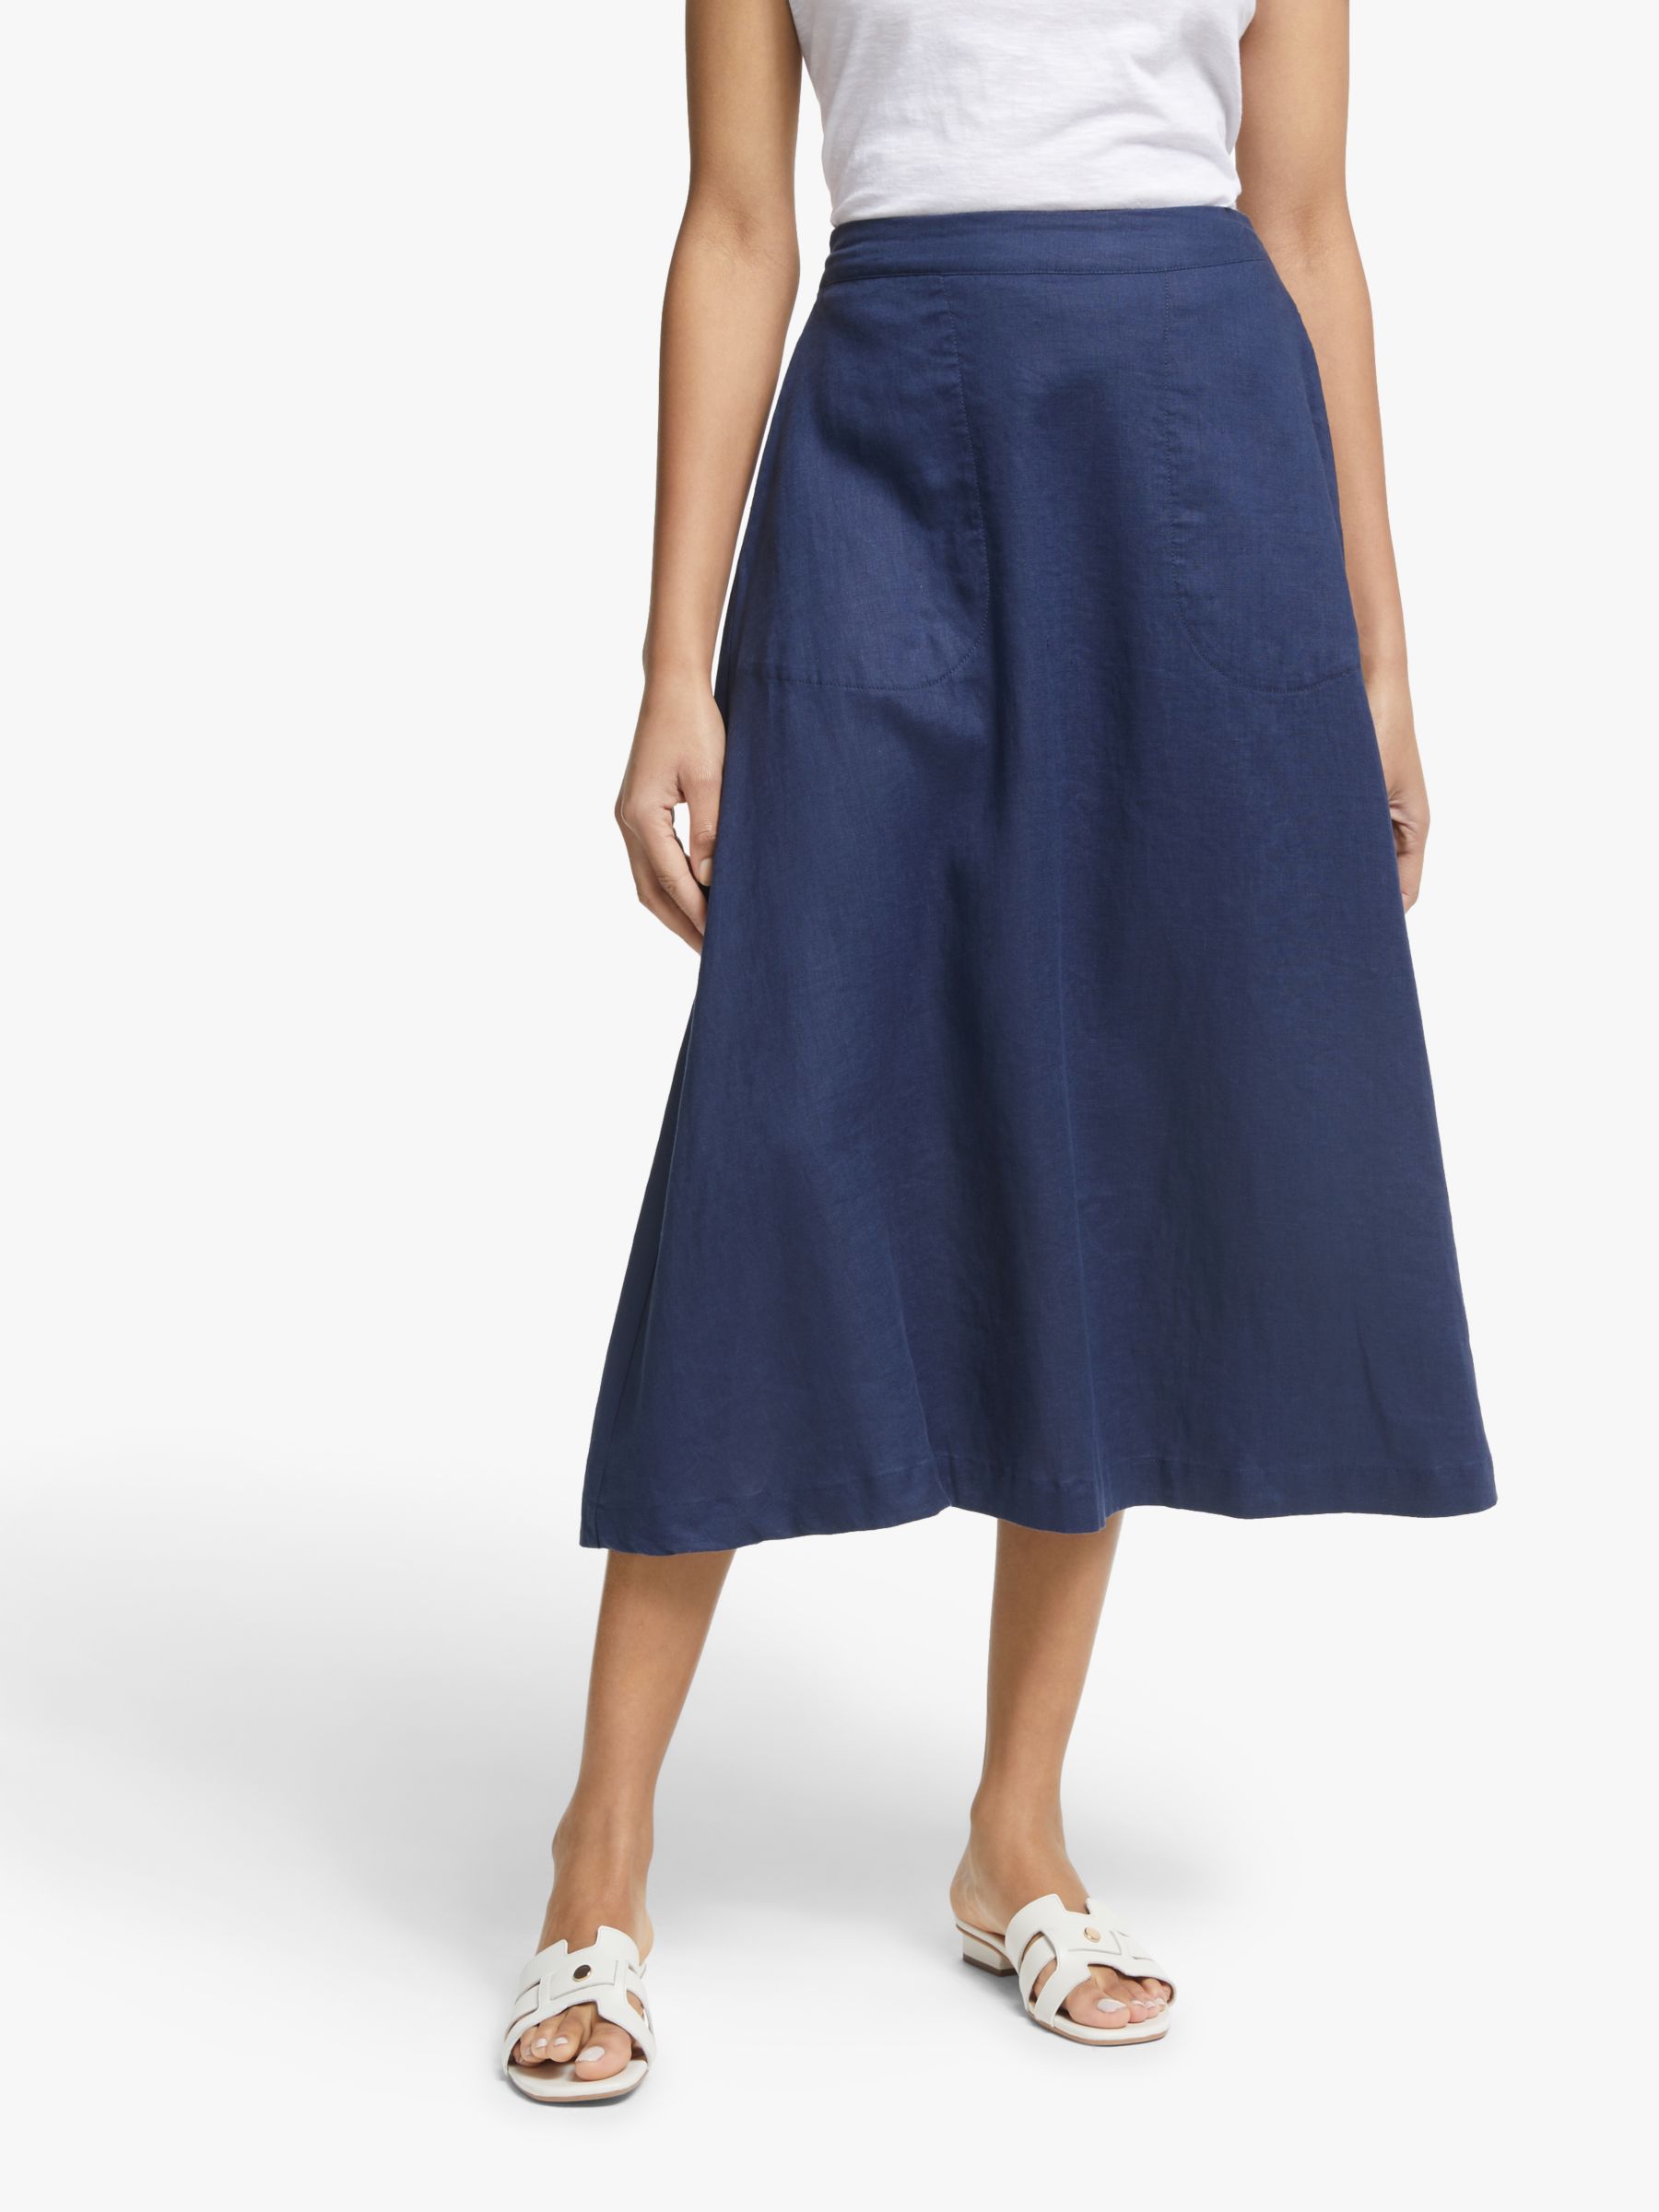 John Lewis & Partners Linen A-Line Midi Skirt, Navy, 18